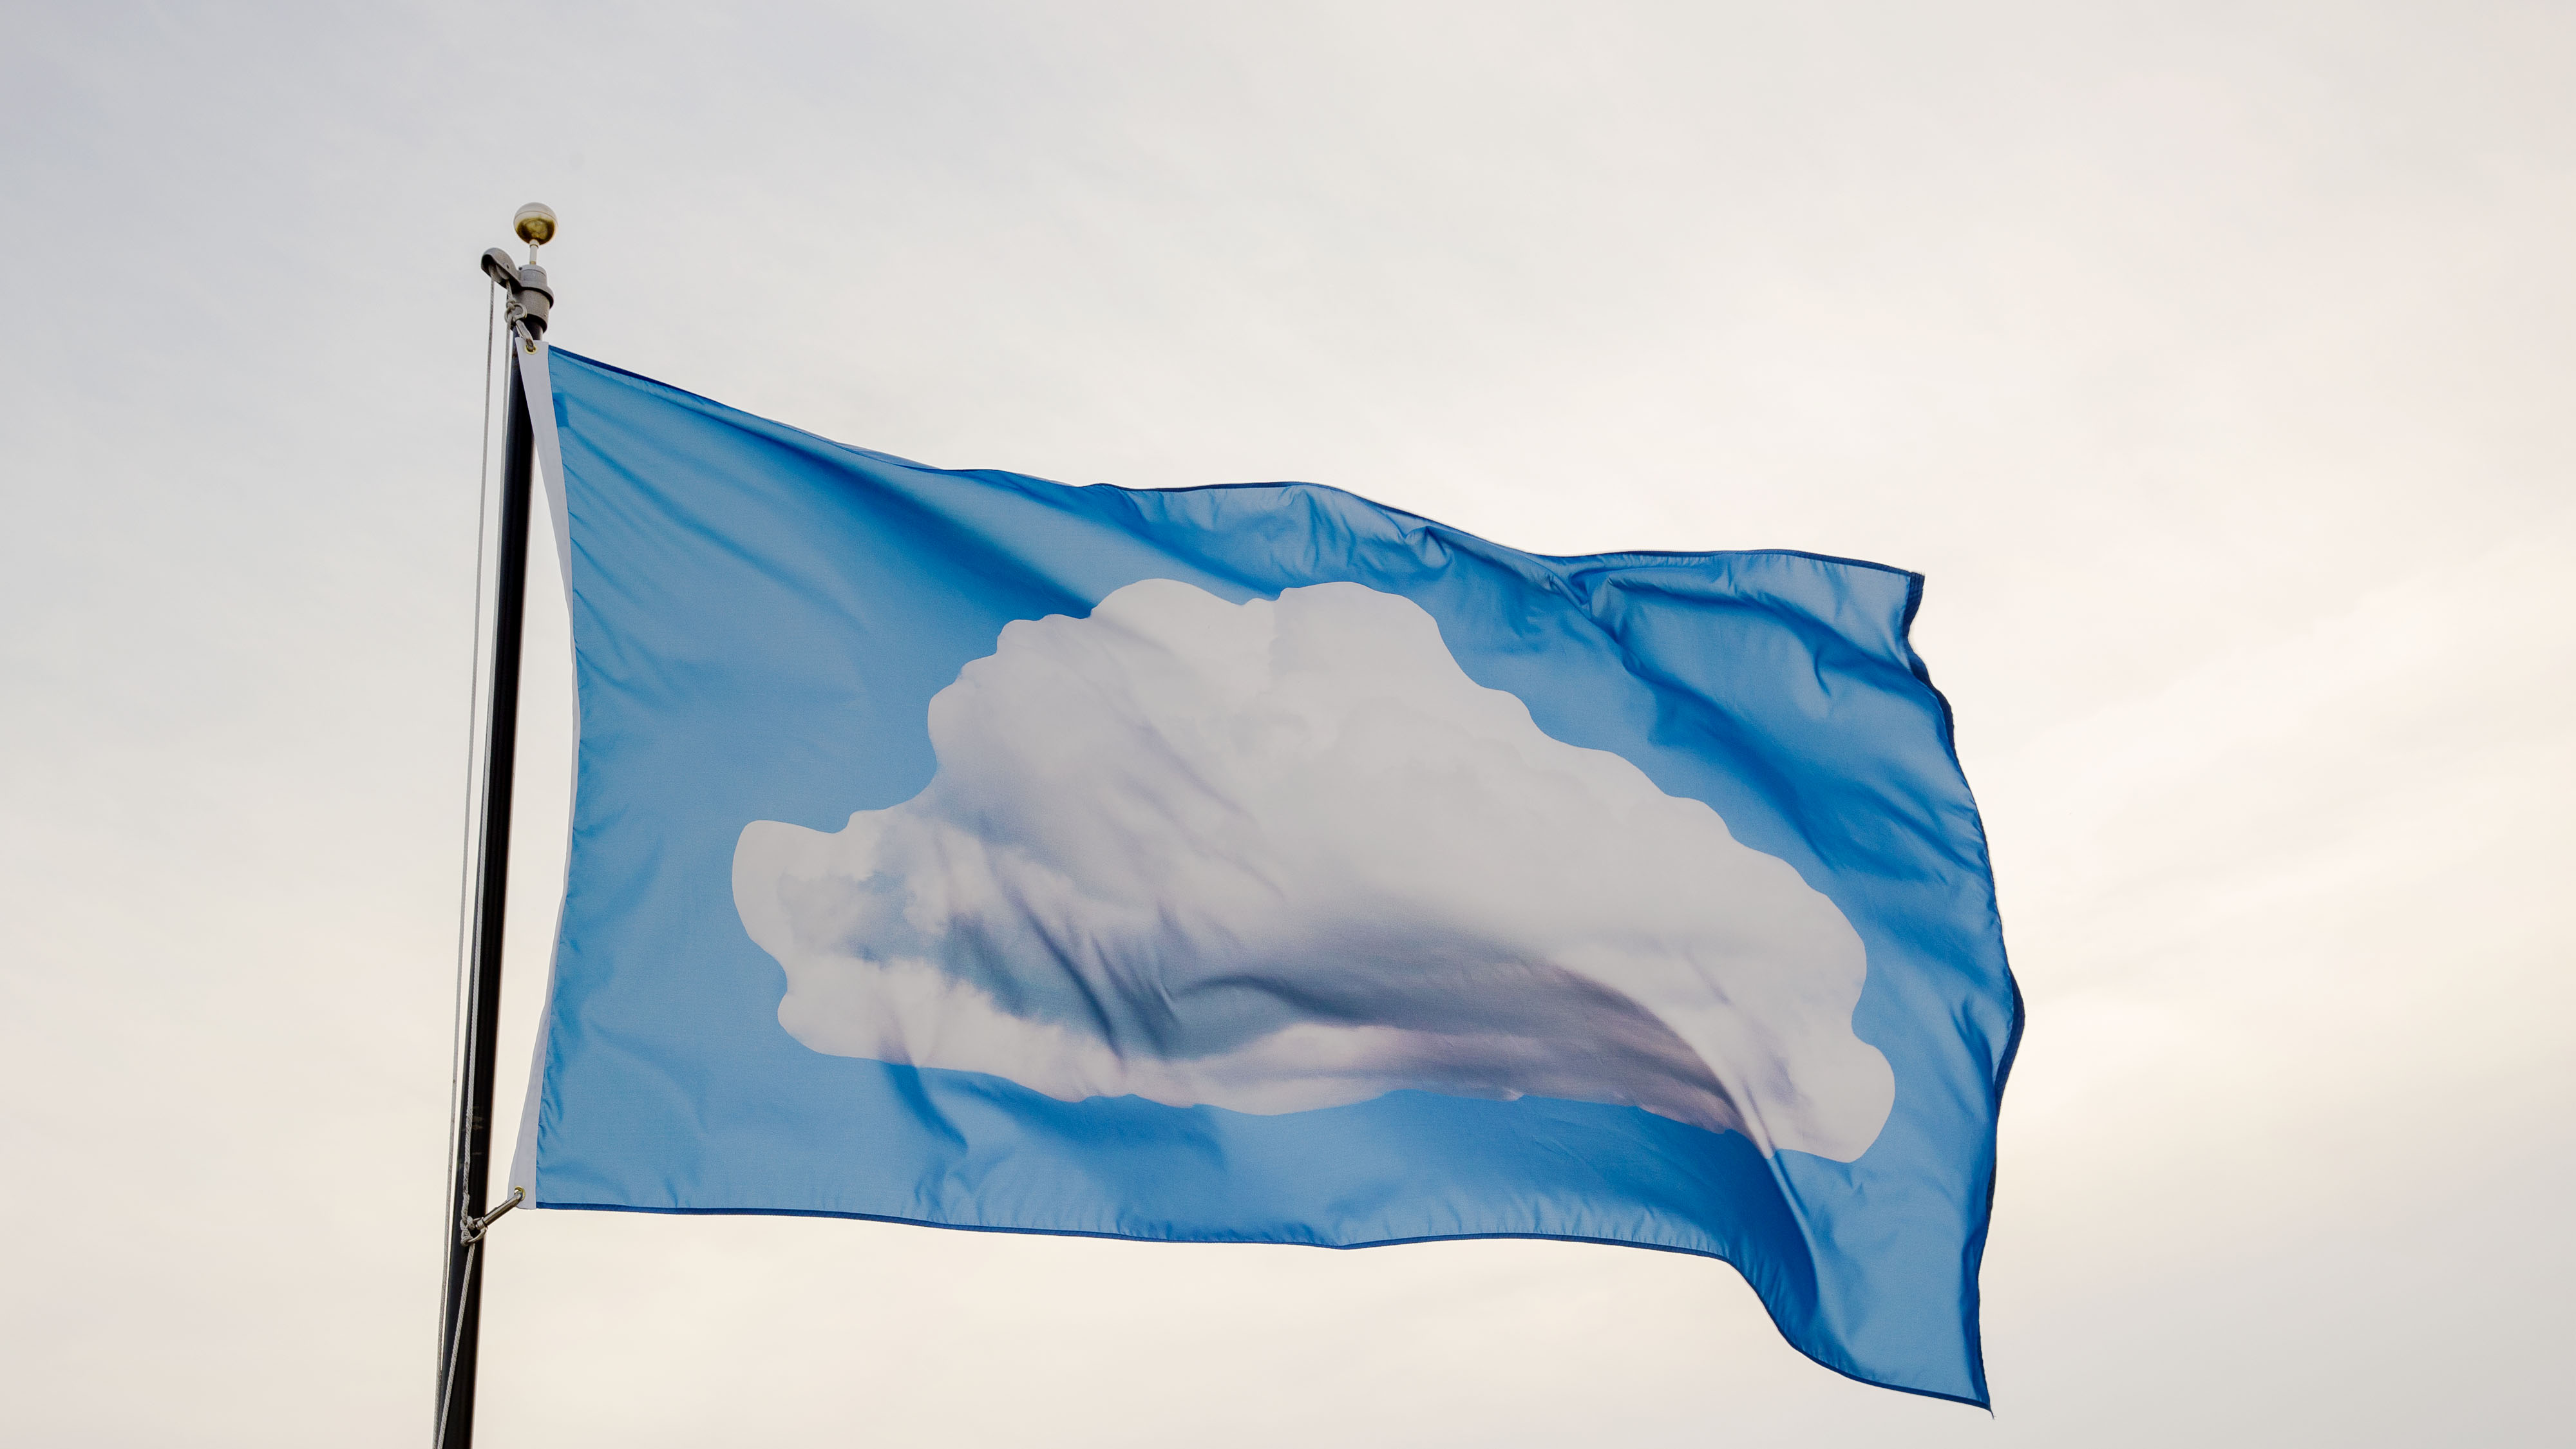 Vik Muniz, Diaspora Cloud, 2017. A cerulean flag with an image of a fluffy cotton-white cloud flies against an overcast sky. 